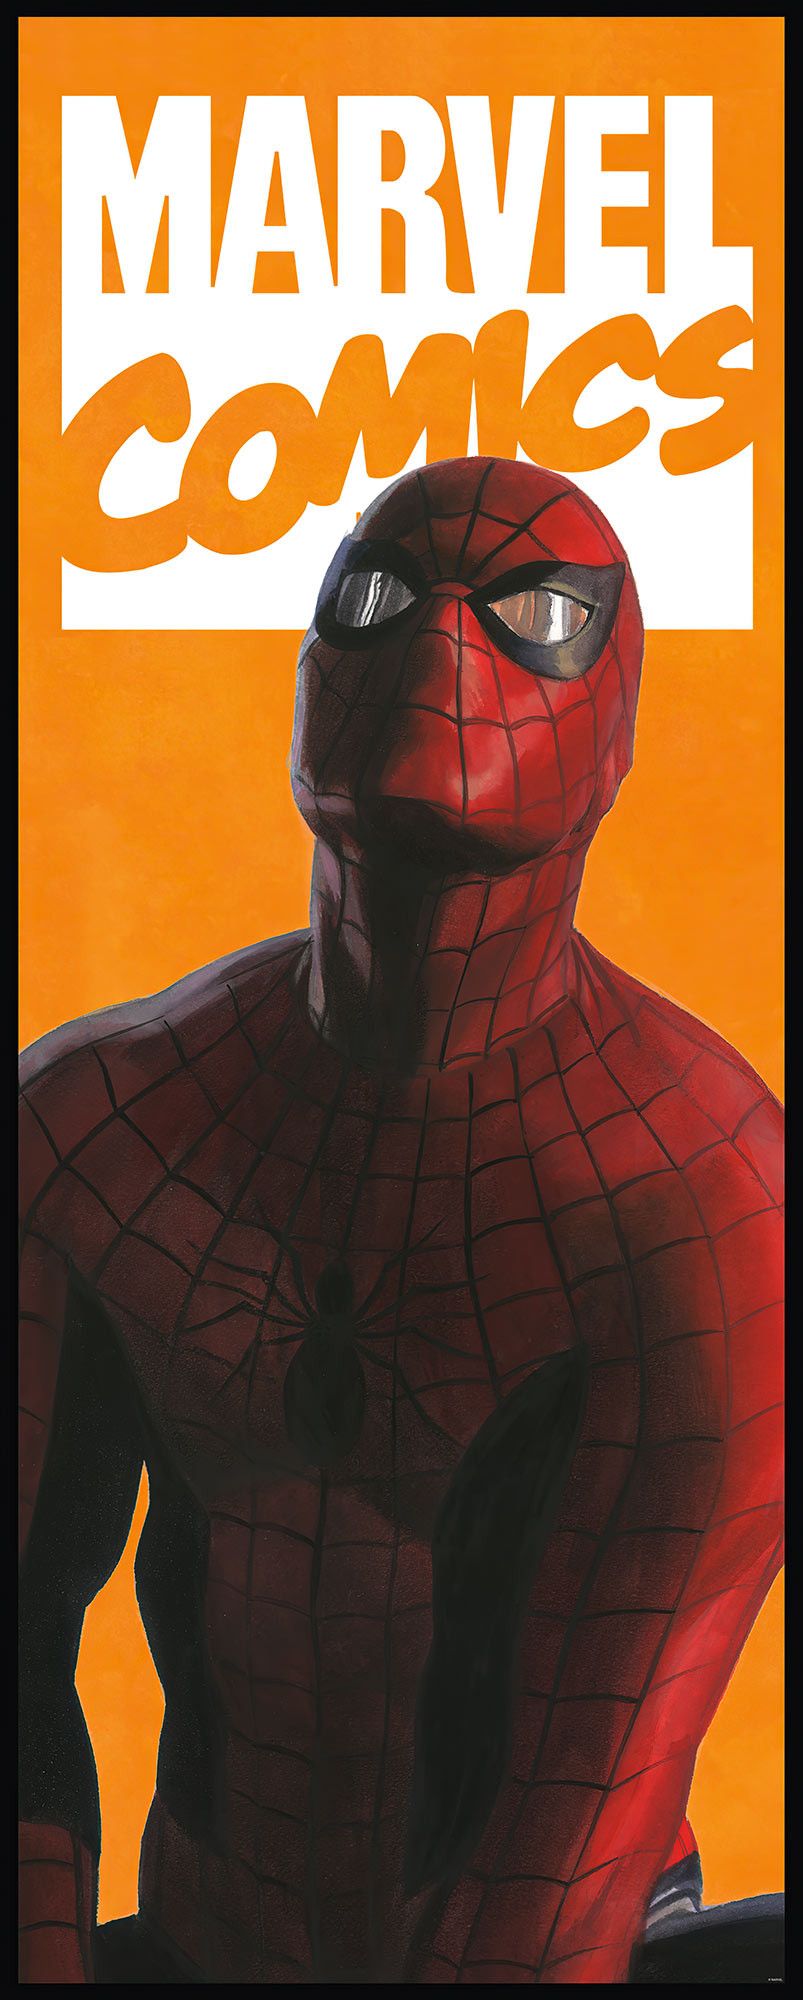 spider man comic wallpaper